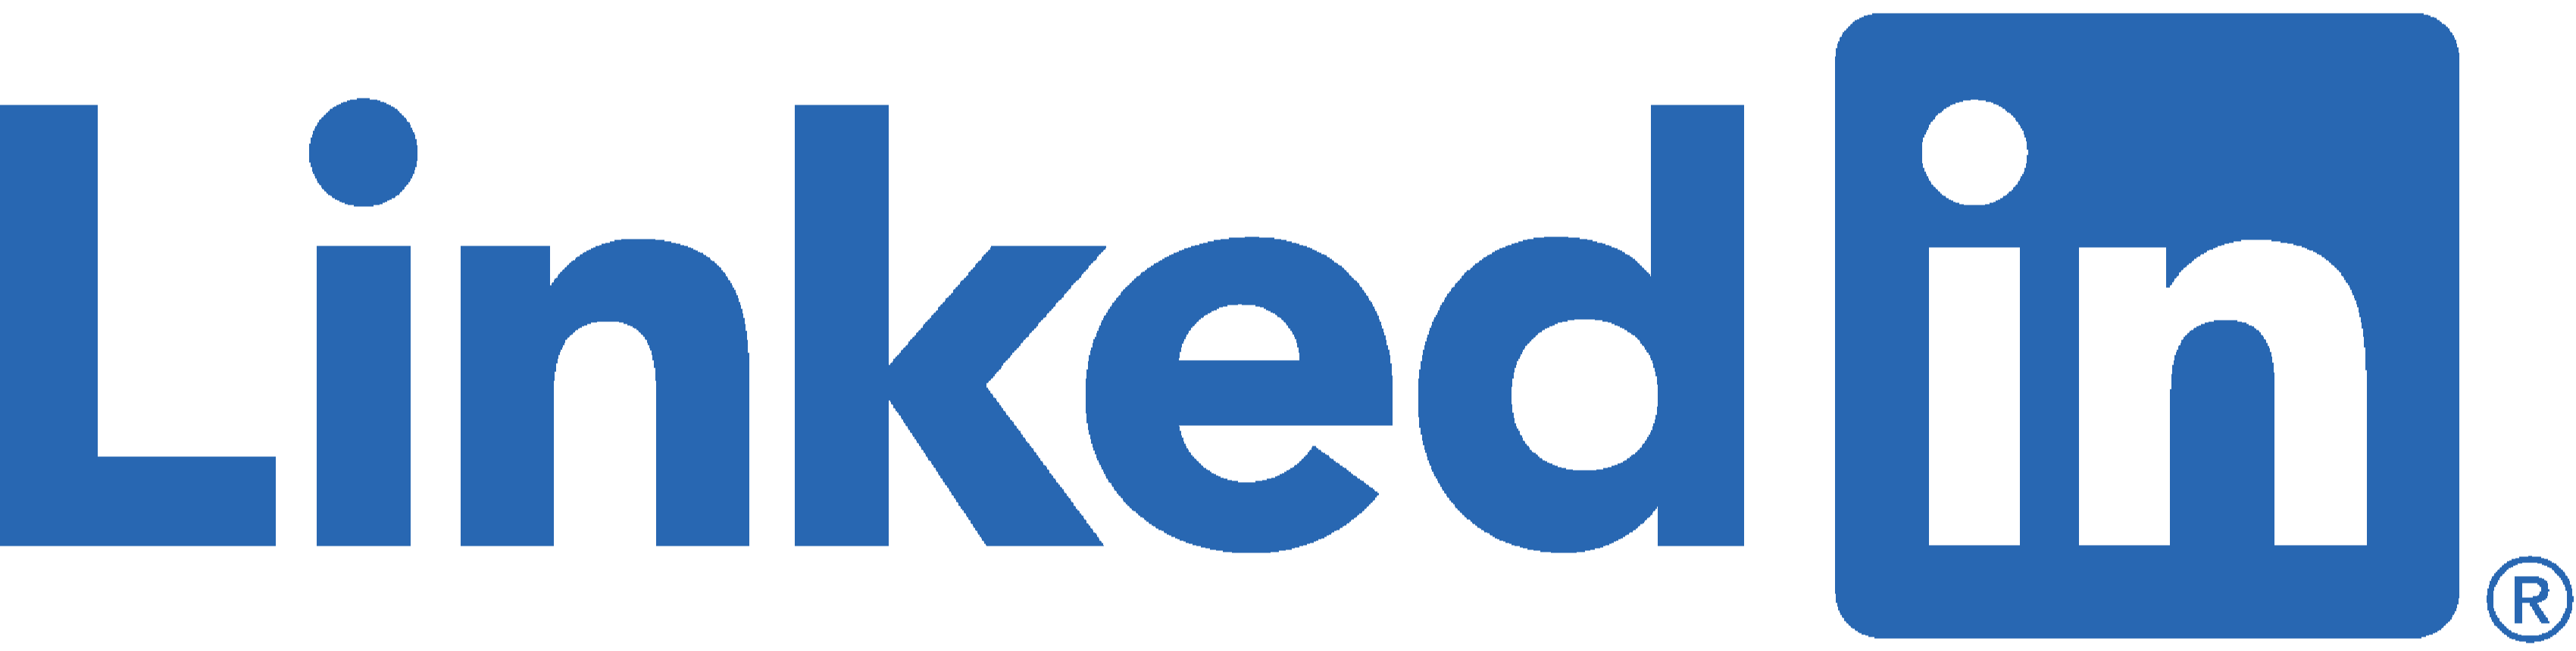 Linkedin-Logo-2-1